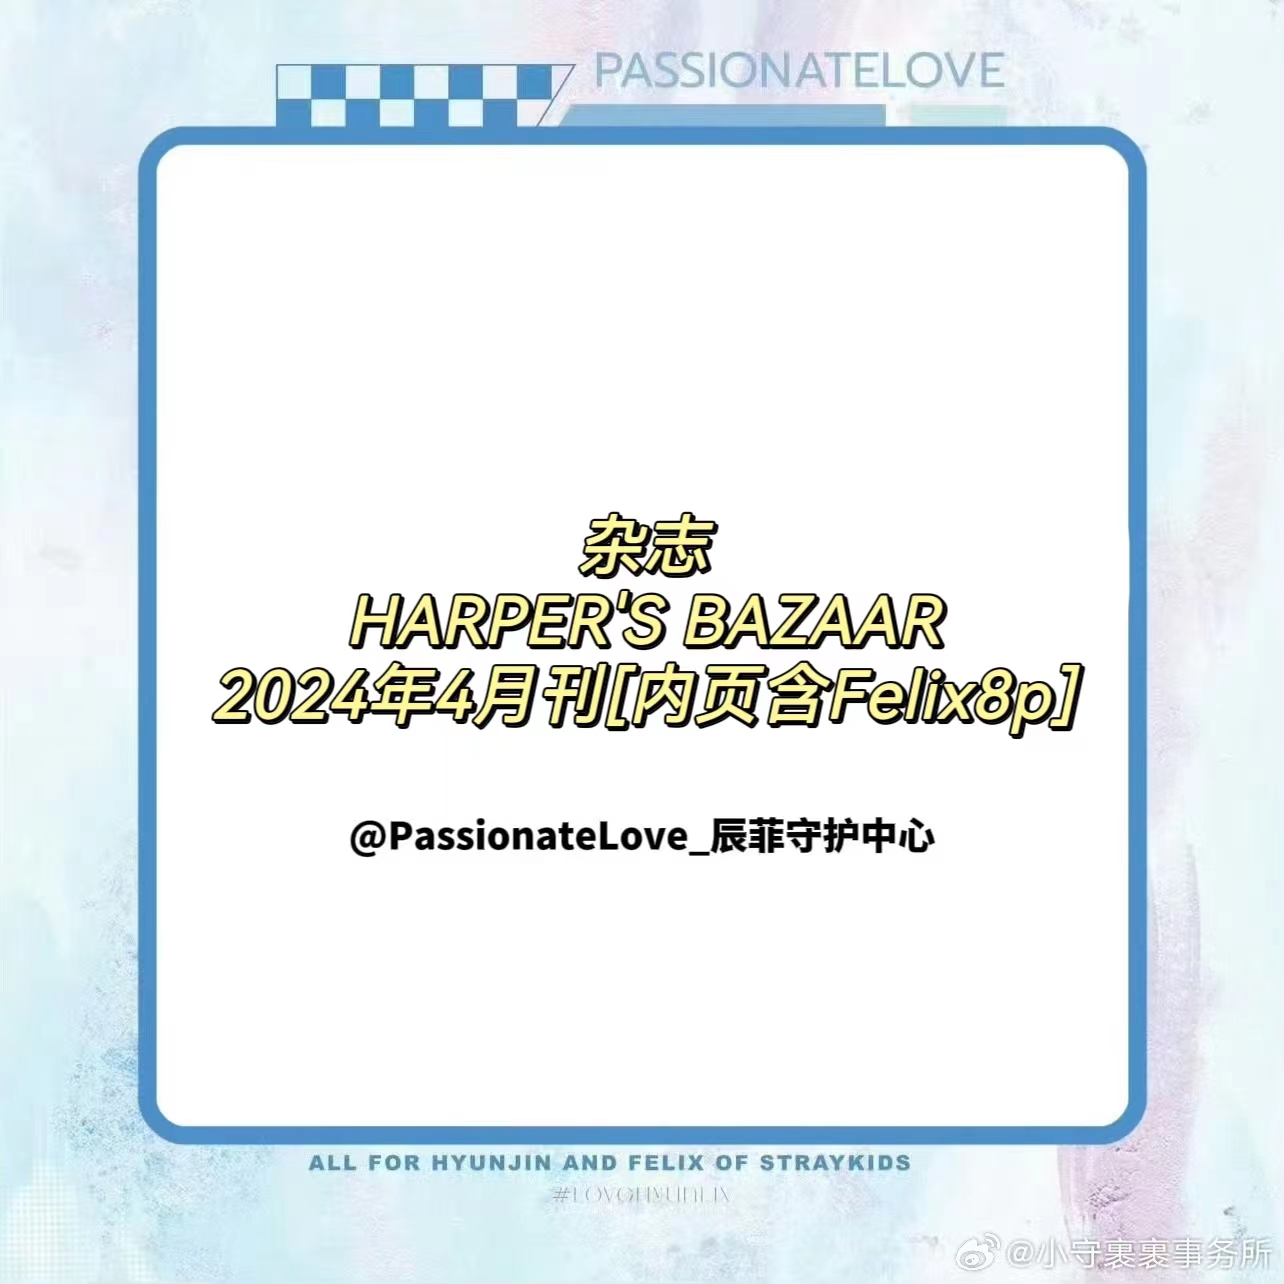 [全款] 芭莎HARPER'S BAZAAR 2024.04 (内页 : FELIX 8p)_ PassionateLove_辰菲守护中心